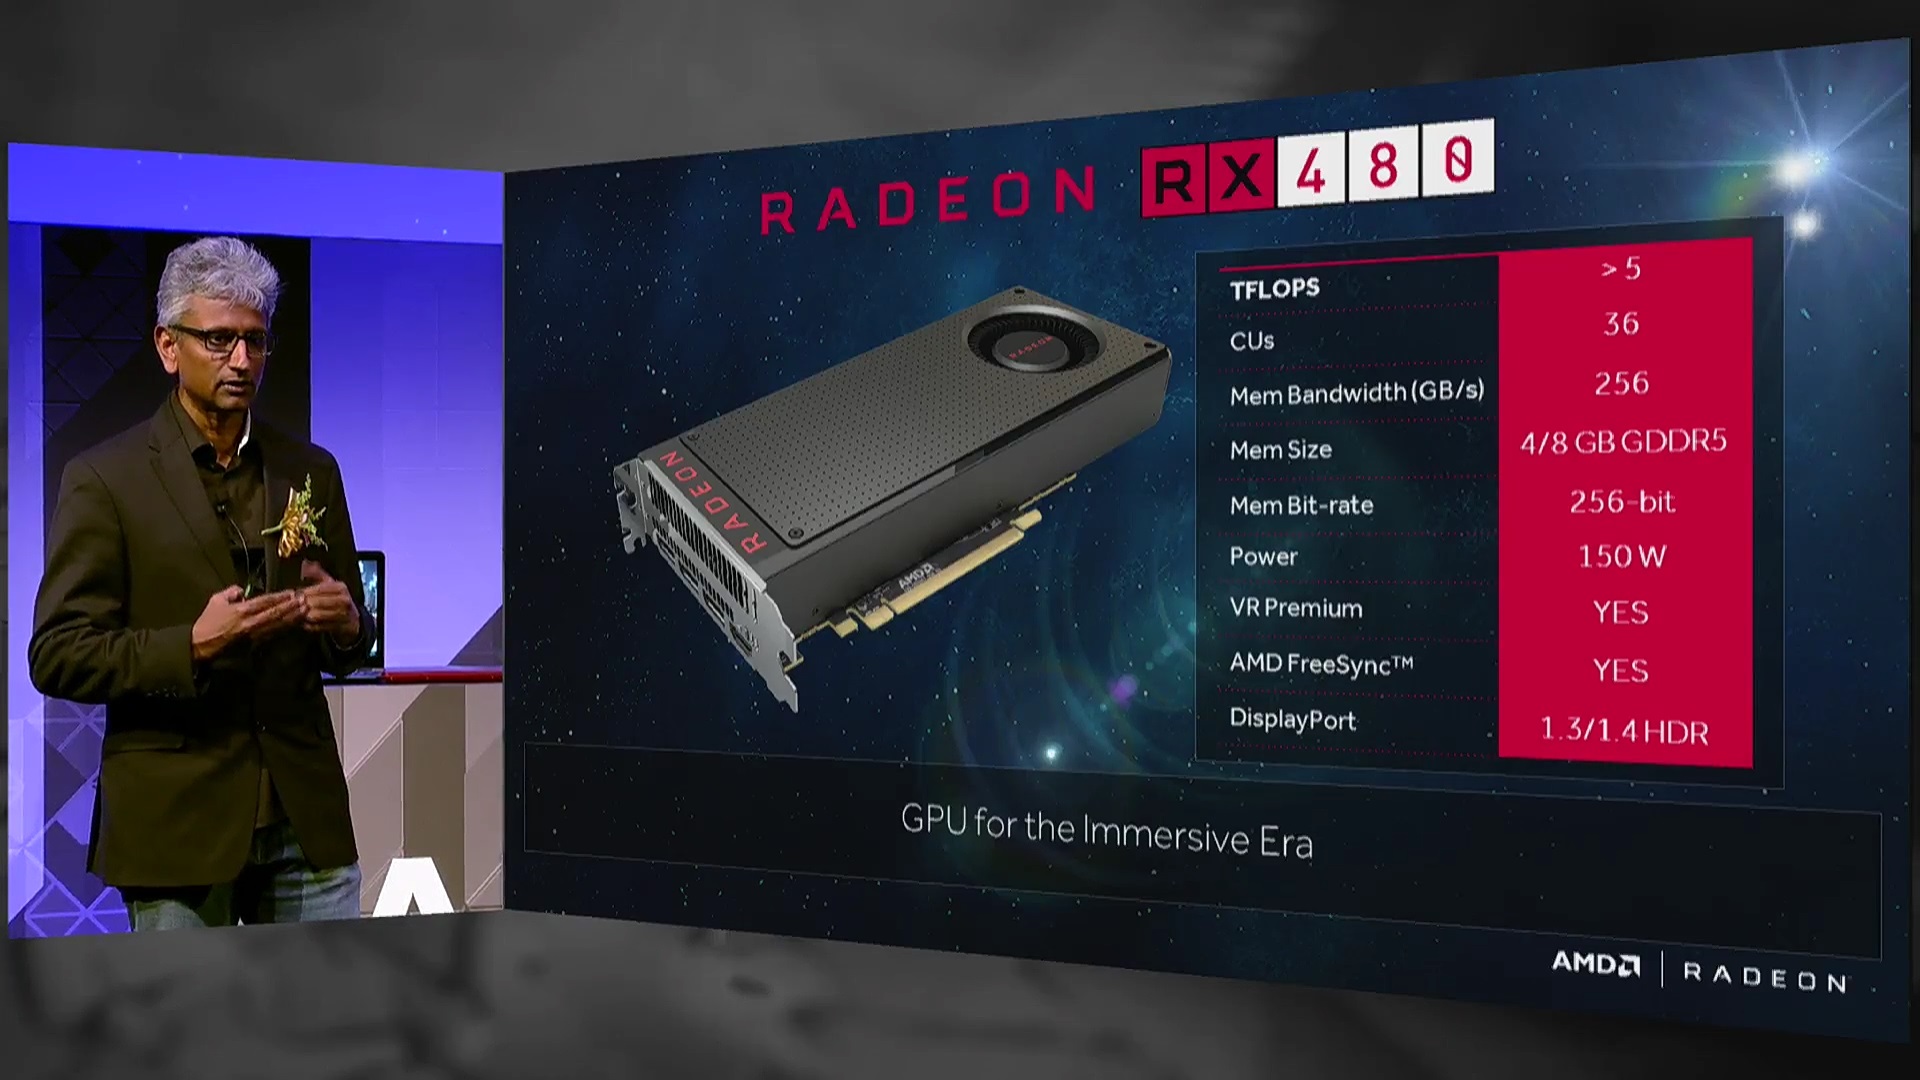 Radeon RX480 feature